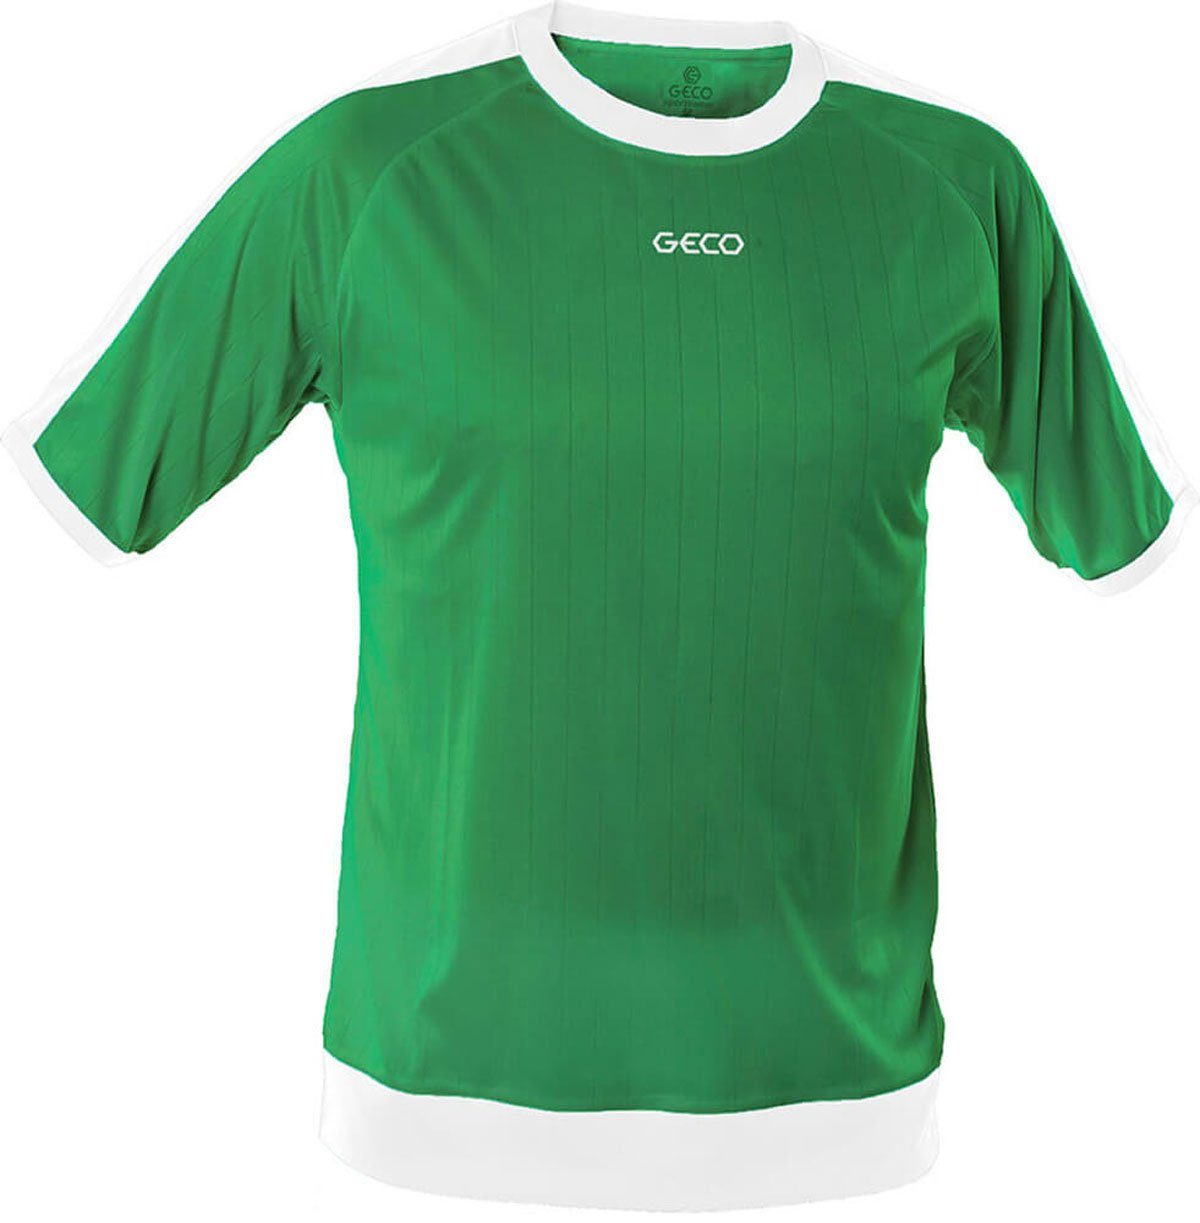 grün/weiß Trikot zweifarbig Sportswear Fußballtrikot kurzarm Fußball NOTOS Geco Geco